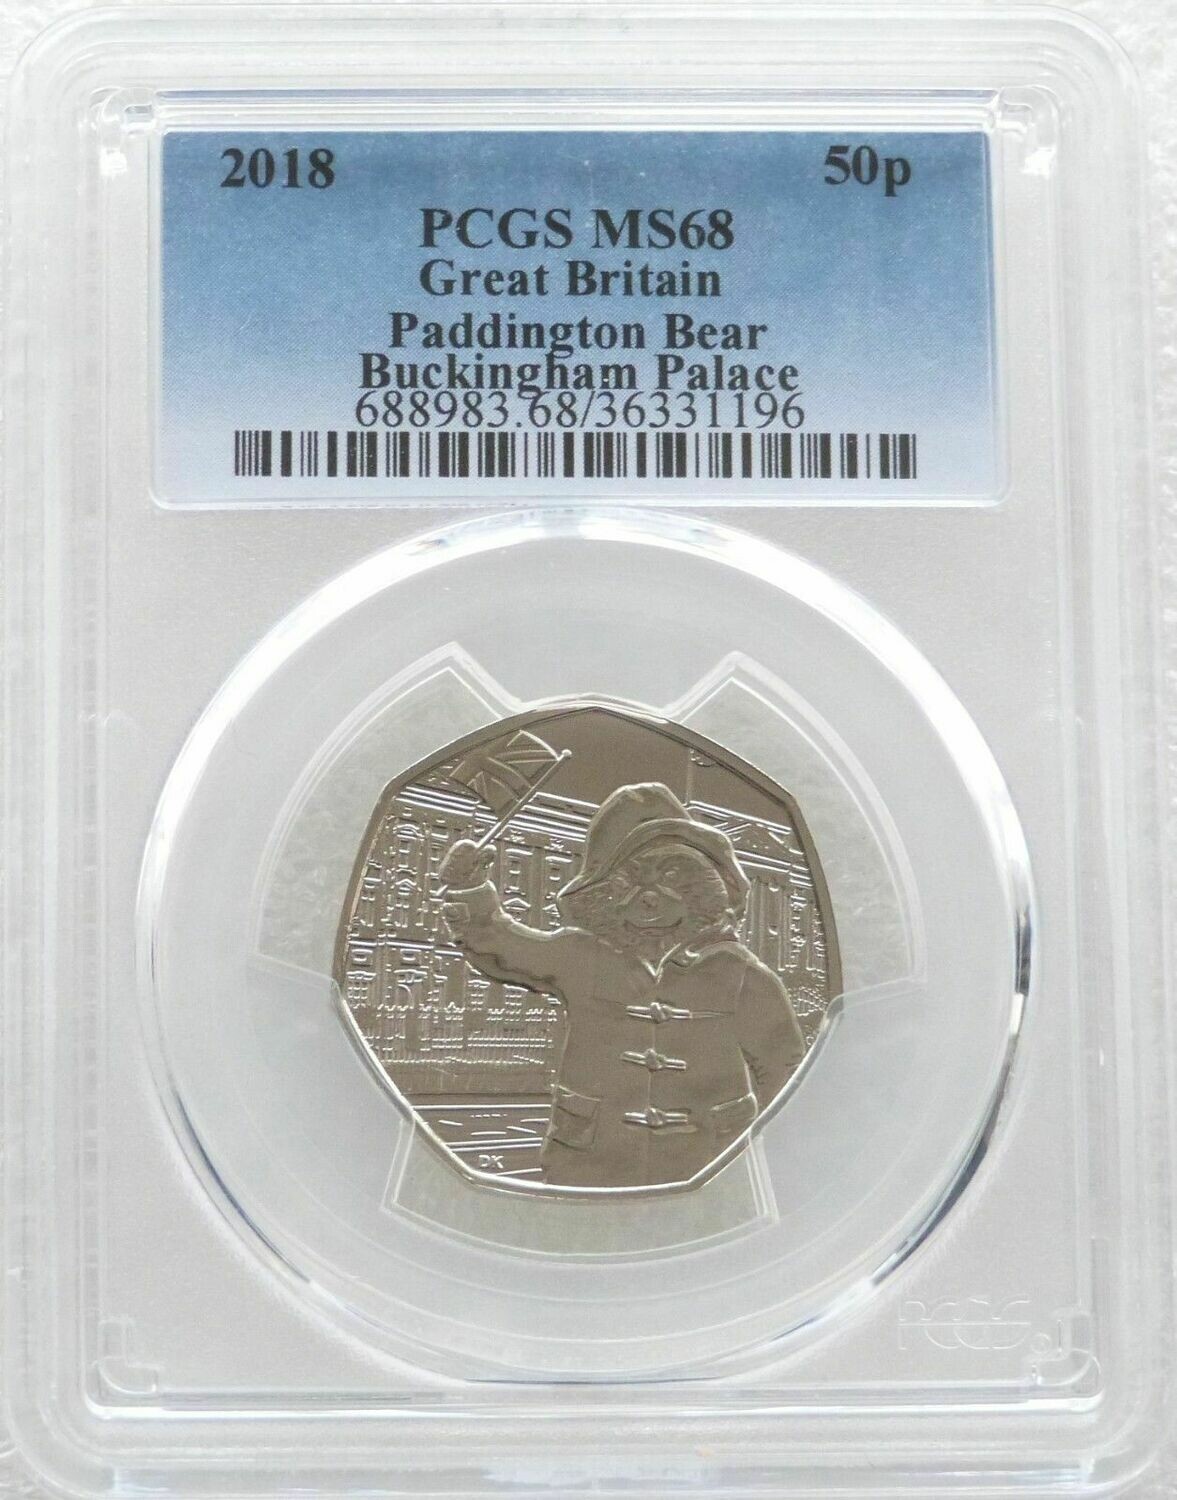 2018 Paddington at Buckingham Palace 50p Brilliant Uncirculated Coin PCGS MS68